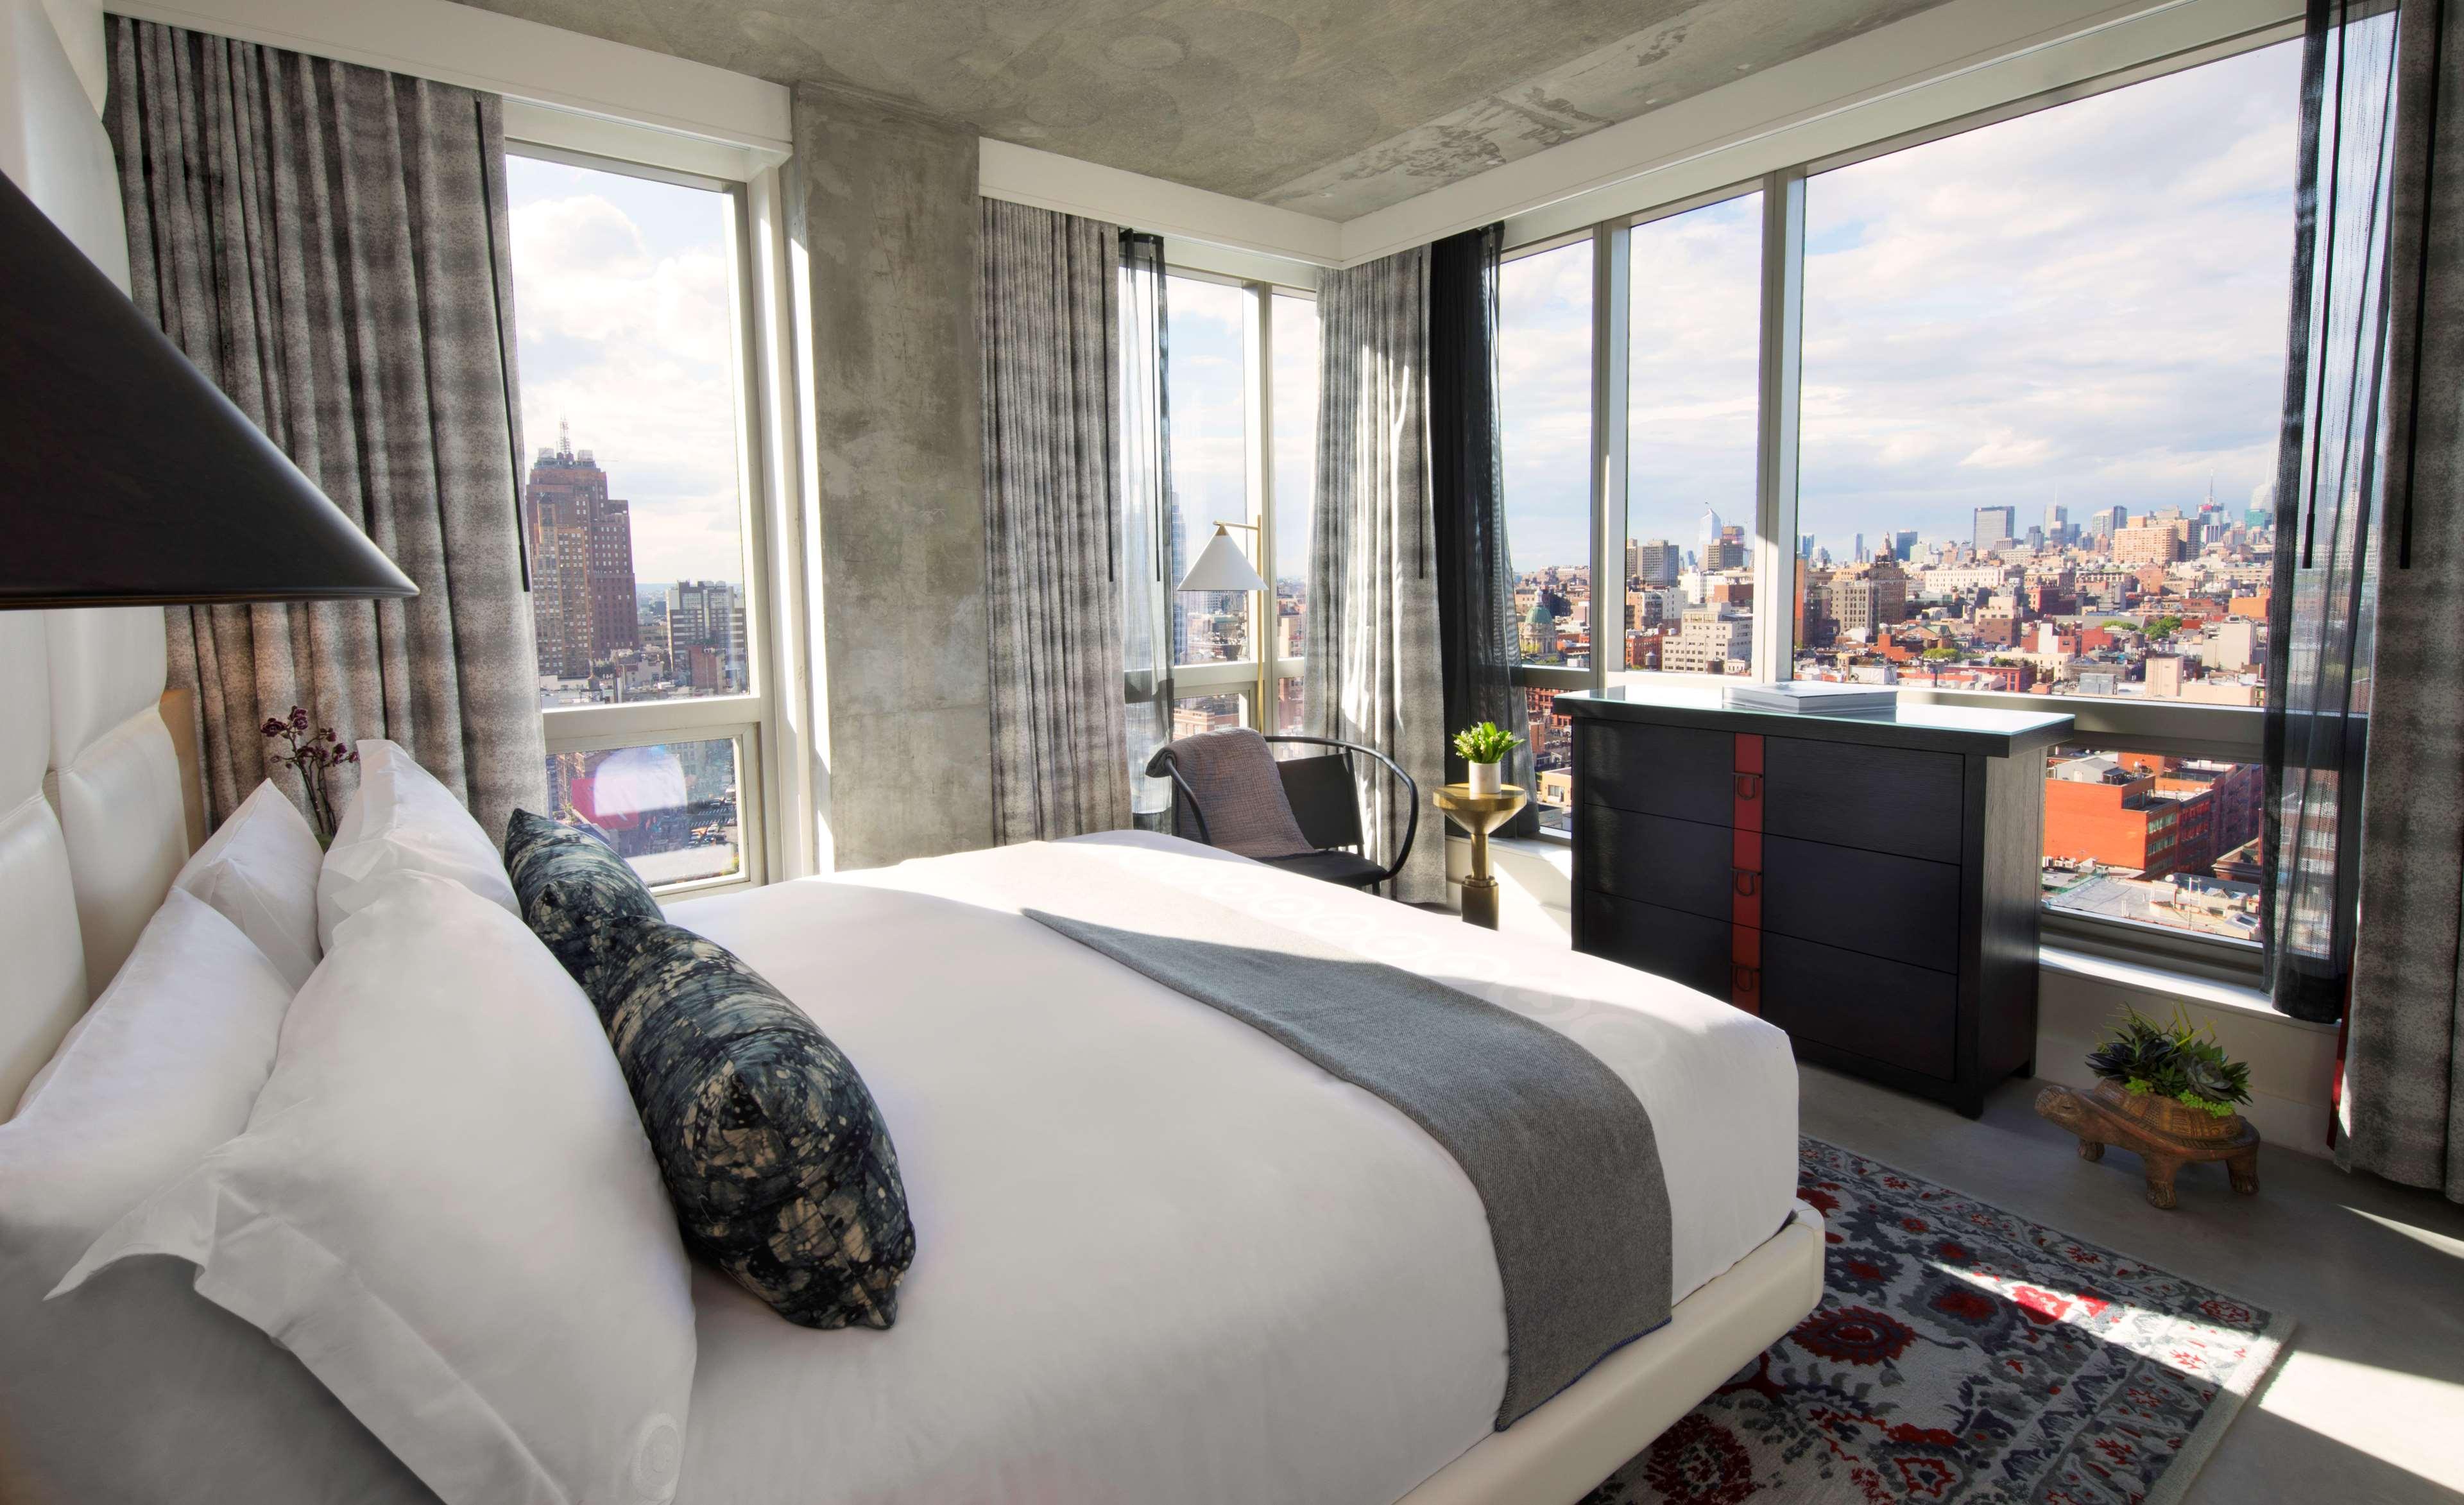 Gallery image of Hotel 50 Bowery Nyc / Manhattan